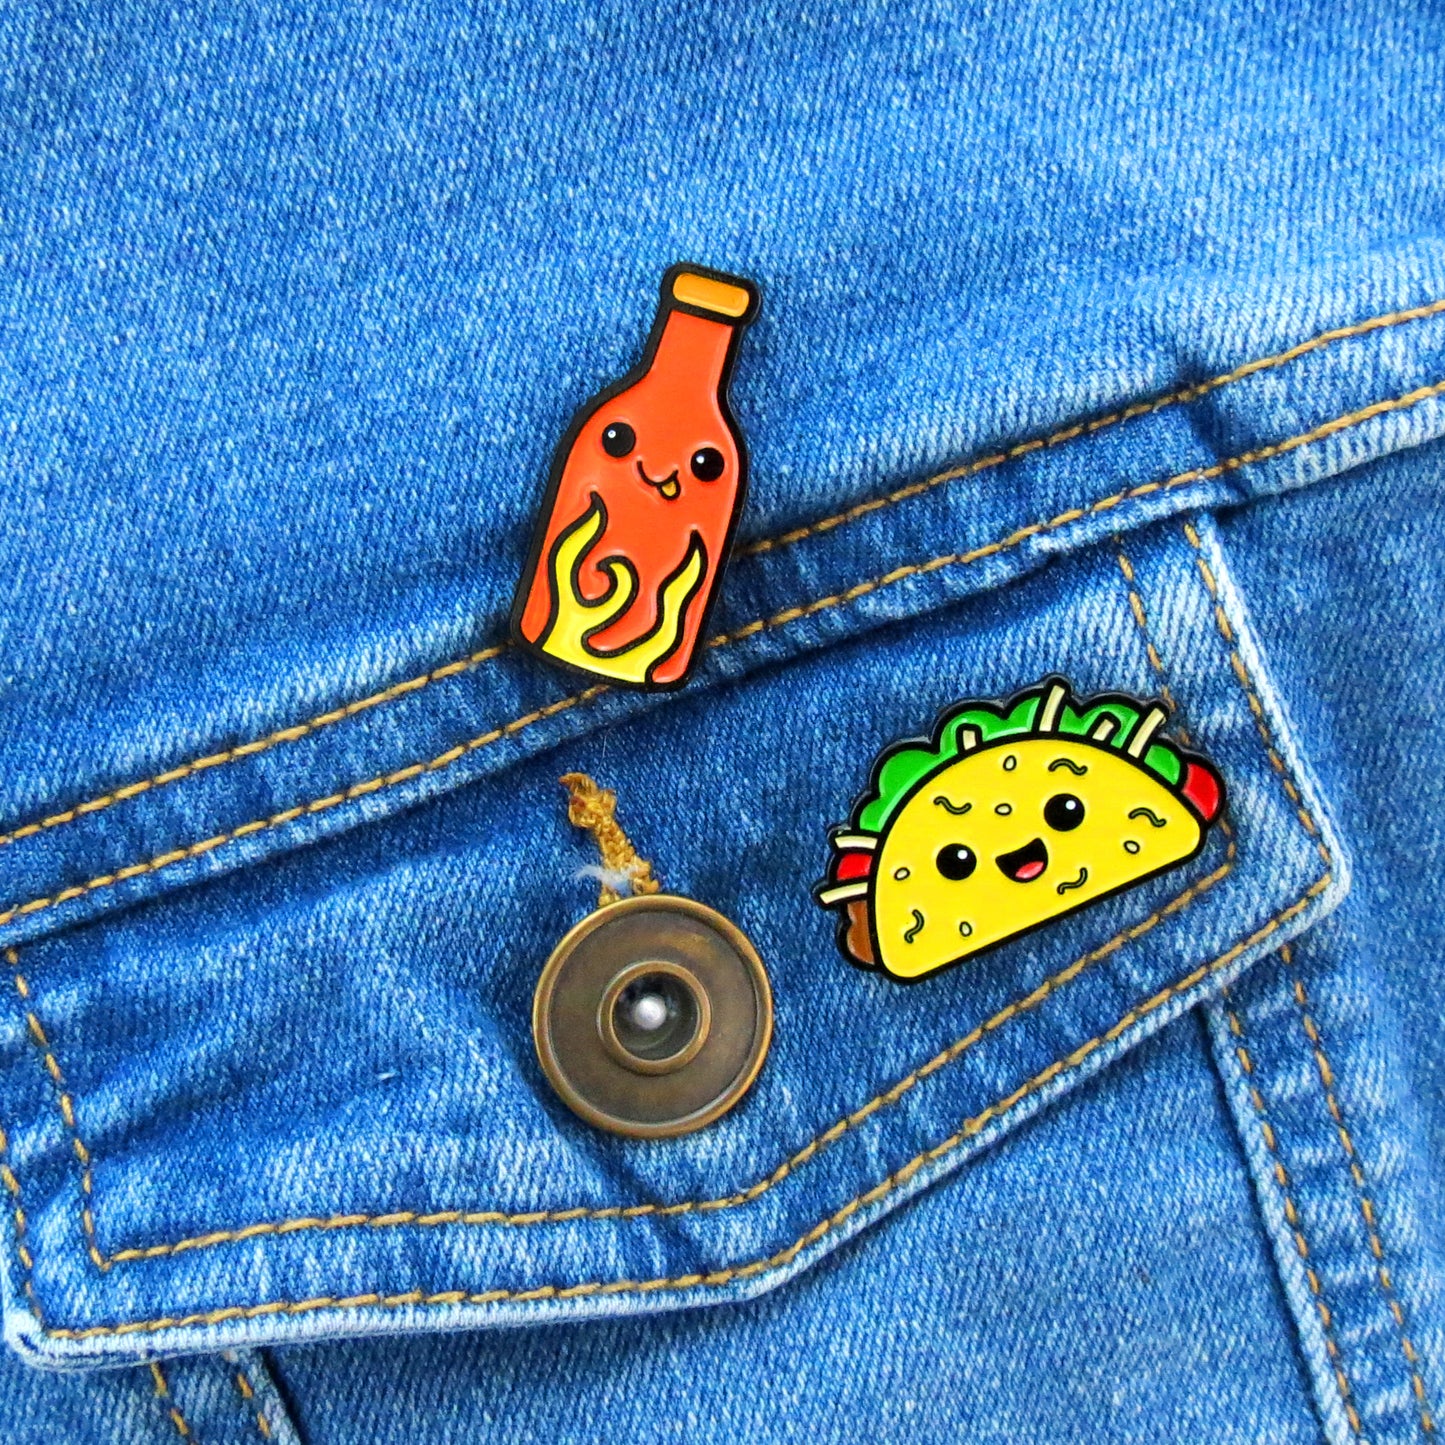 Taco and Hot Sauce enamel pins on jean jacket pocket